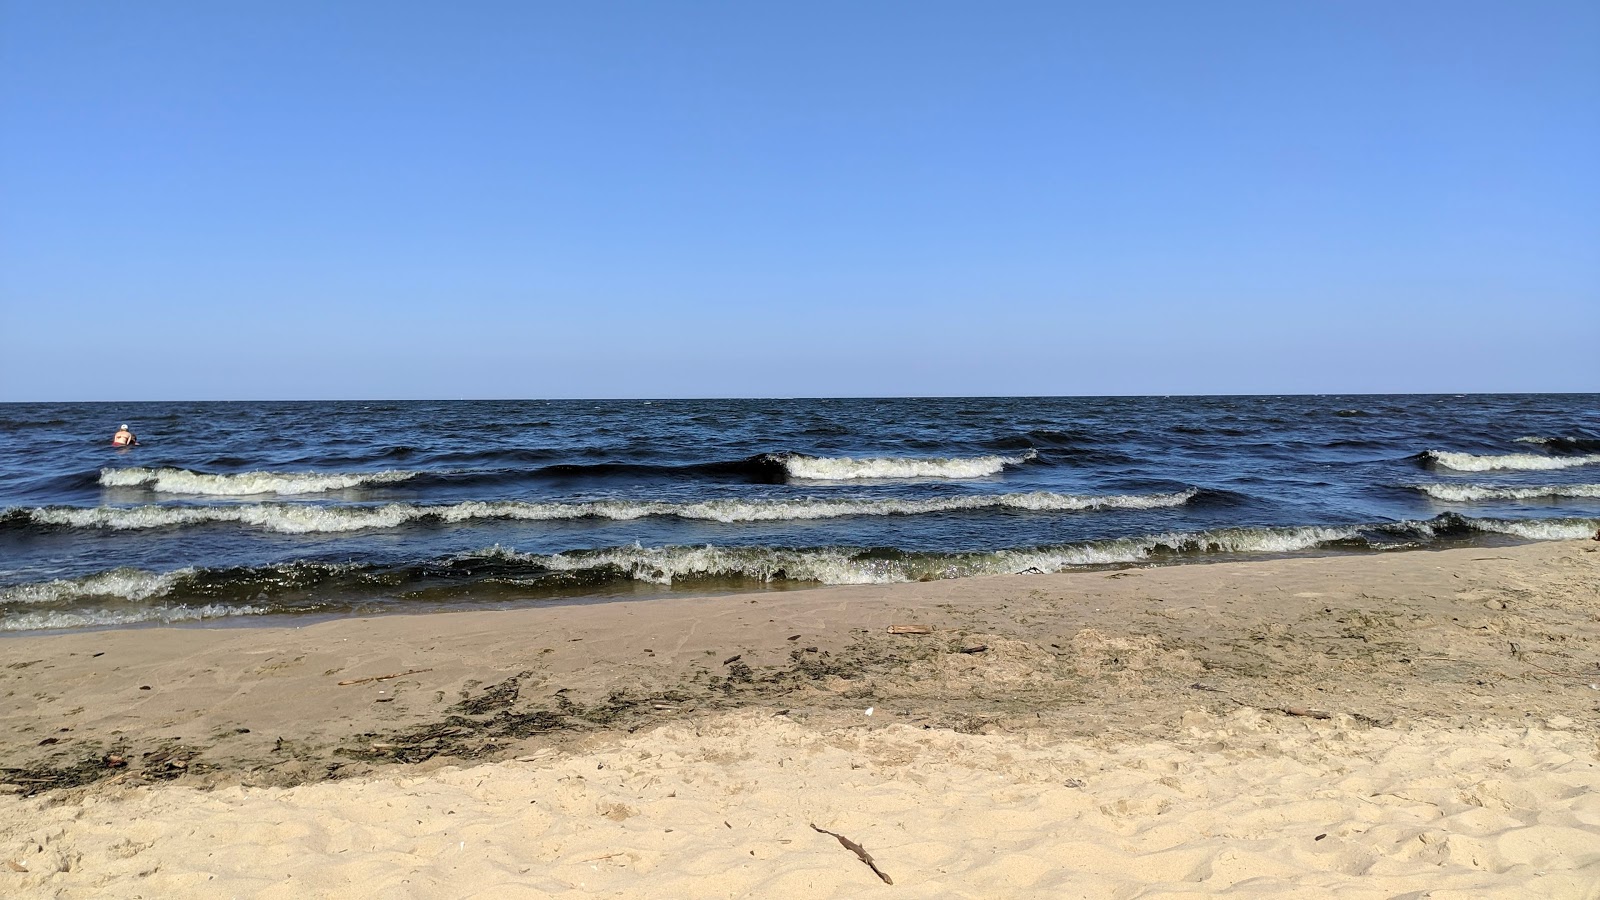 Fotografija Mikoszewo Beach nahaja se v naravnem okolju